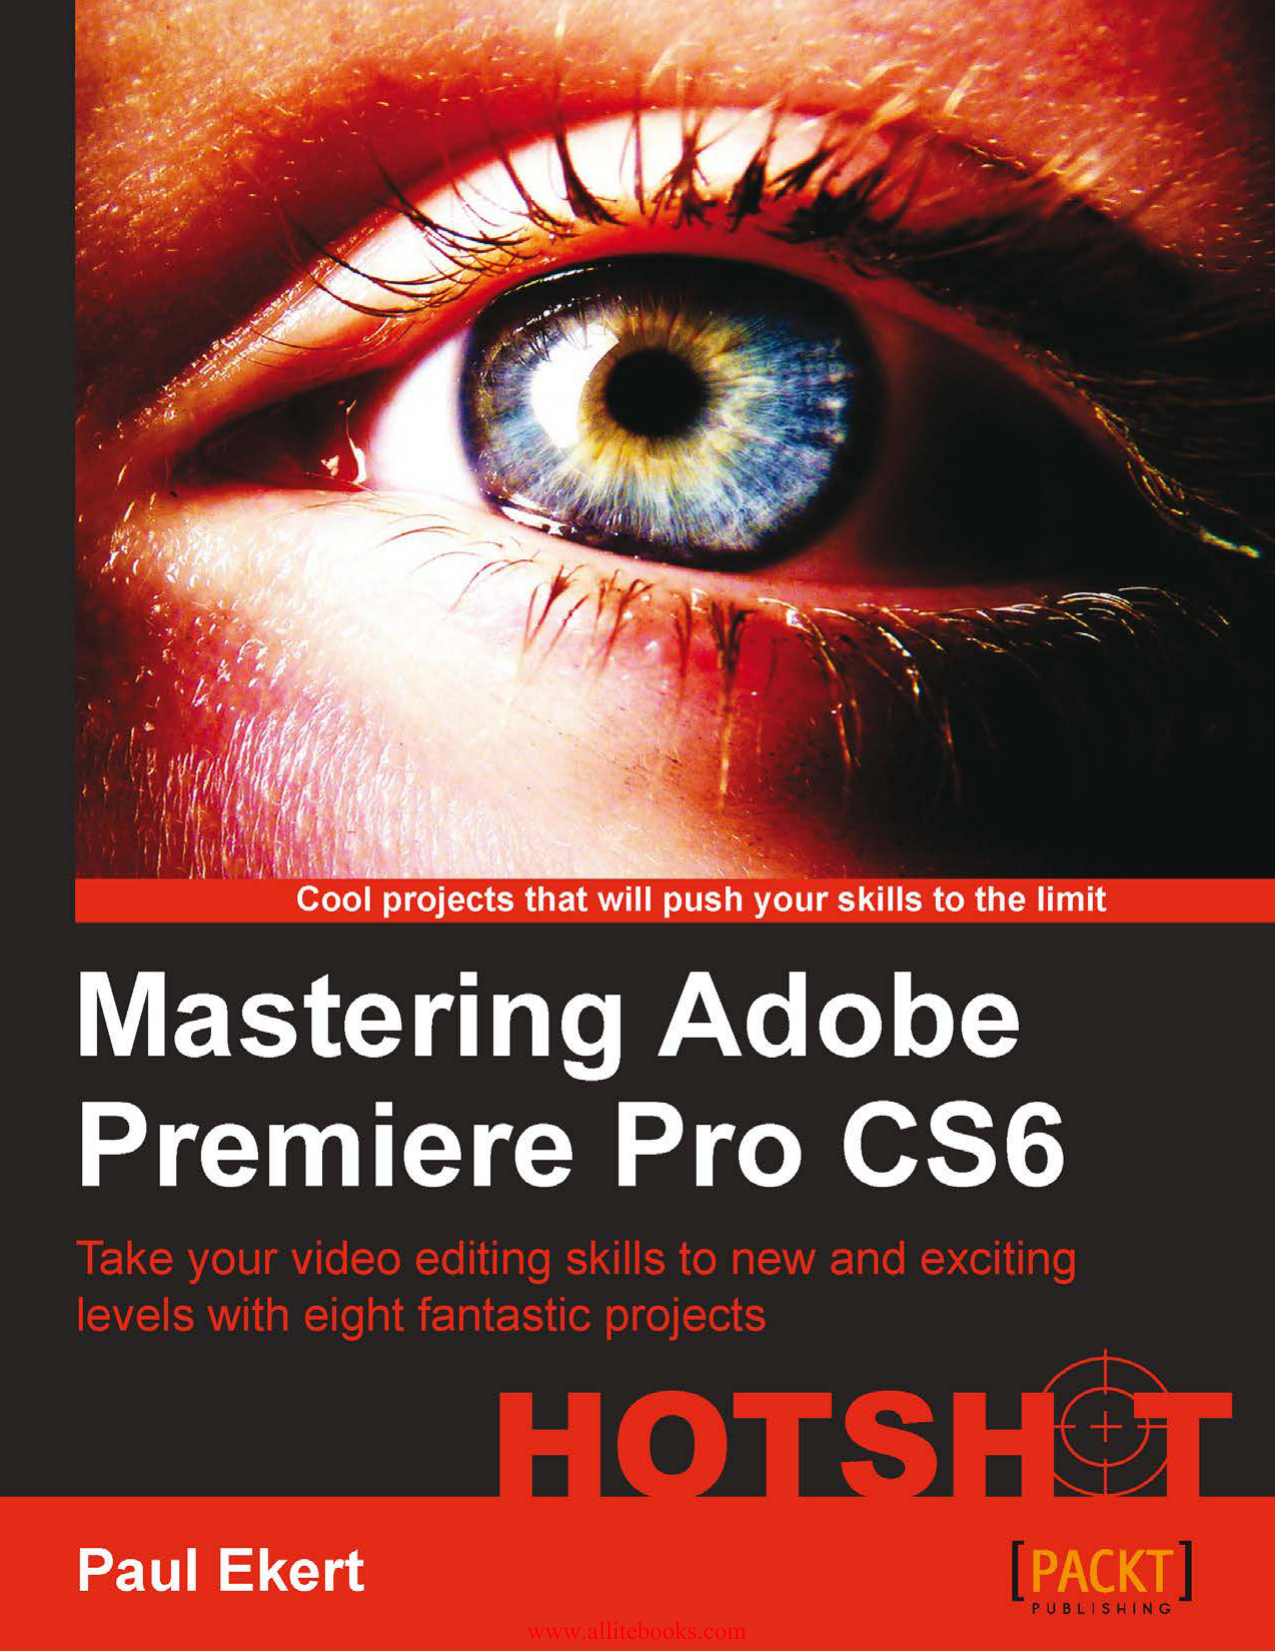 adobe premiere pro cs6 free full download windows 10